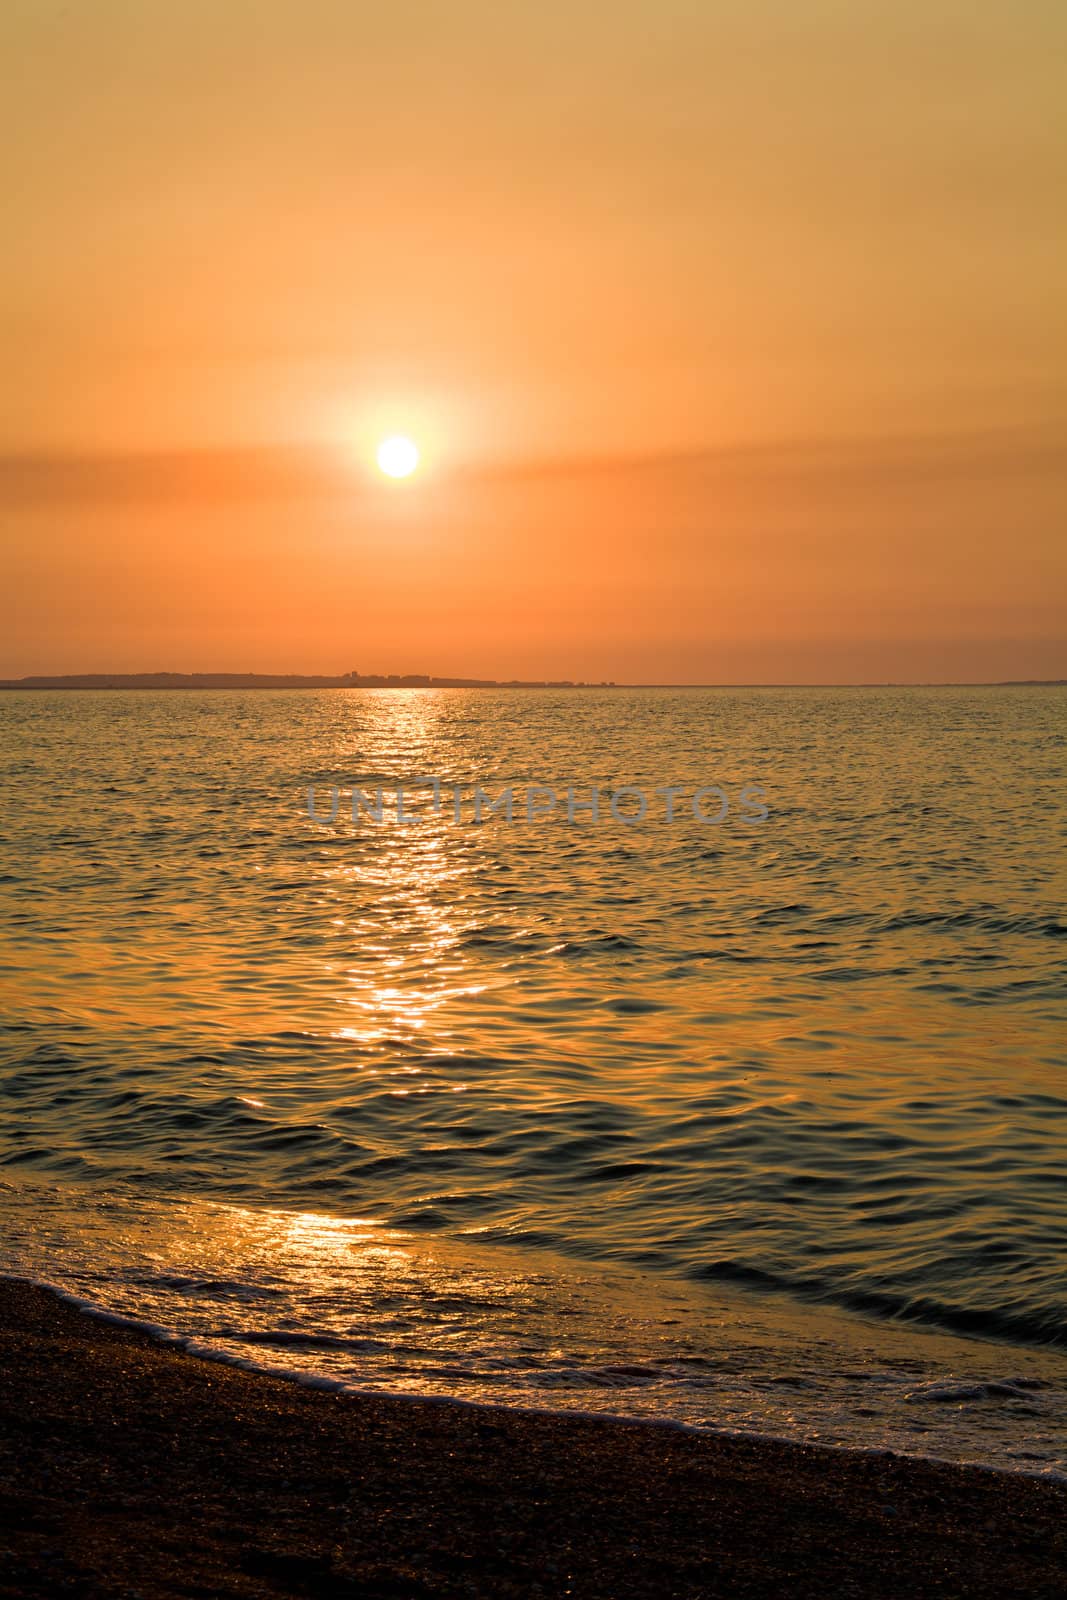 txture series: reflection of the sunset on sea